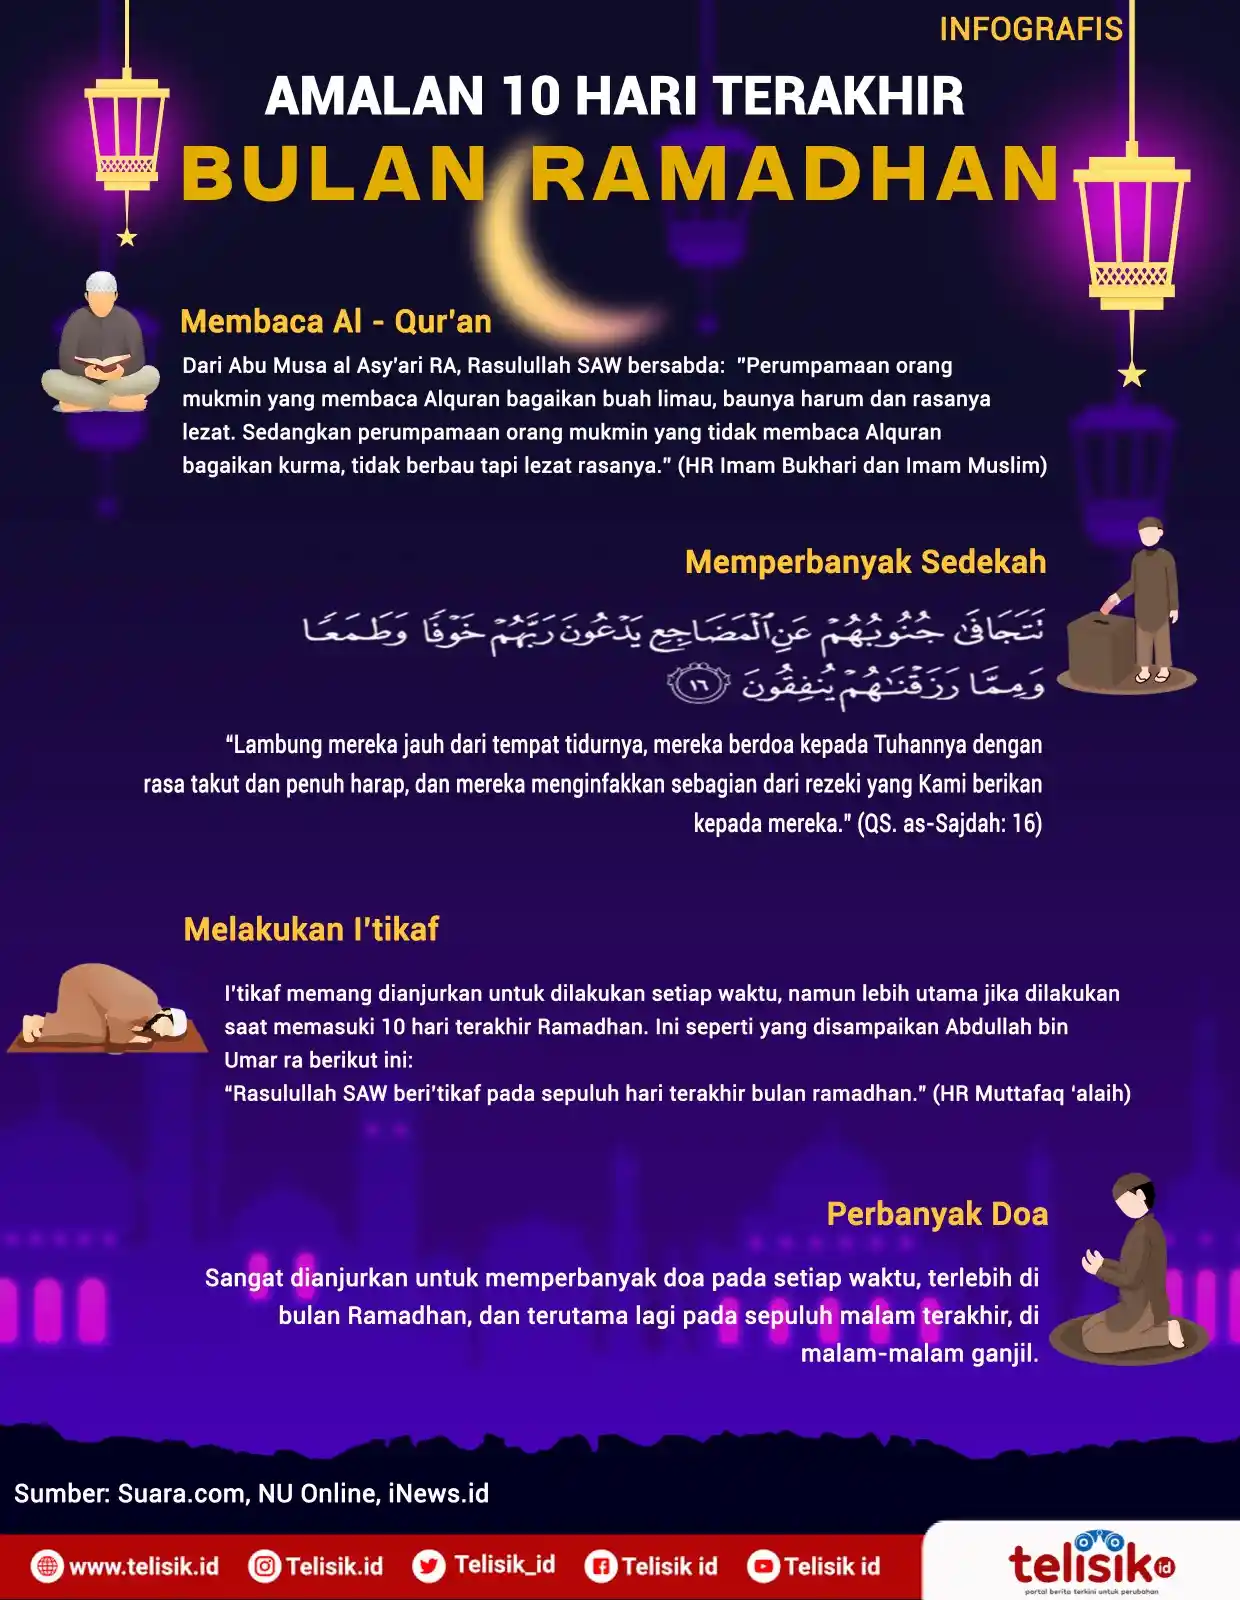 Infografis: Amalan 10 Malam Terakhir Bulan Ramadhan, Dianjurkan Nabi Muhammad SAW 